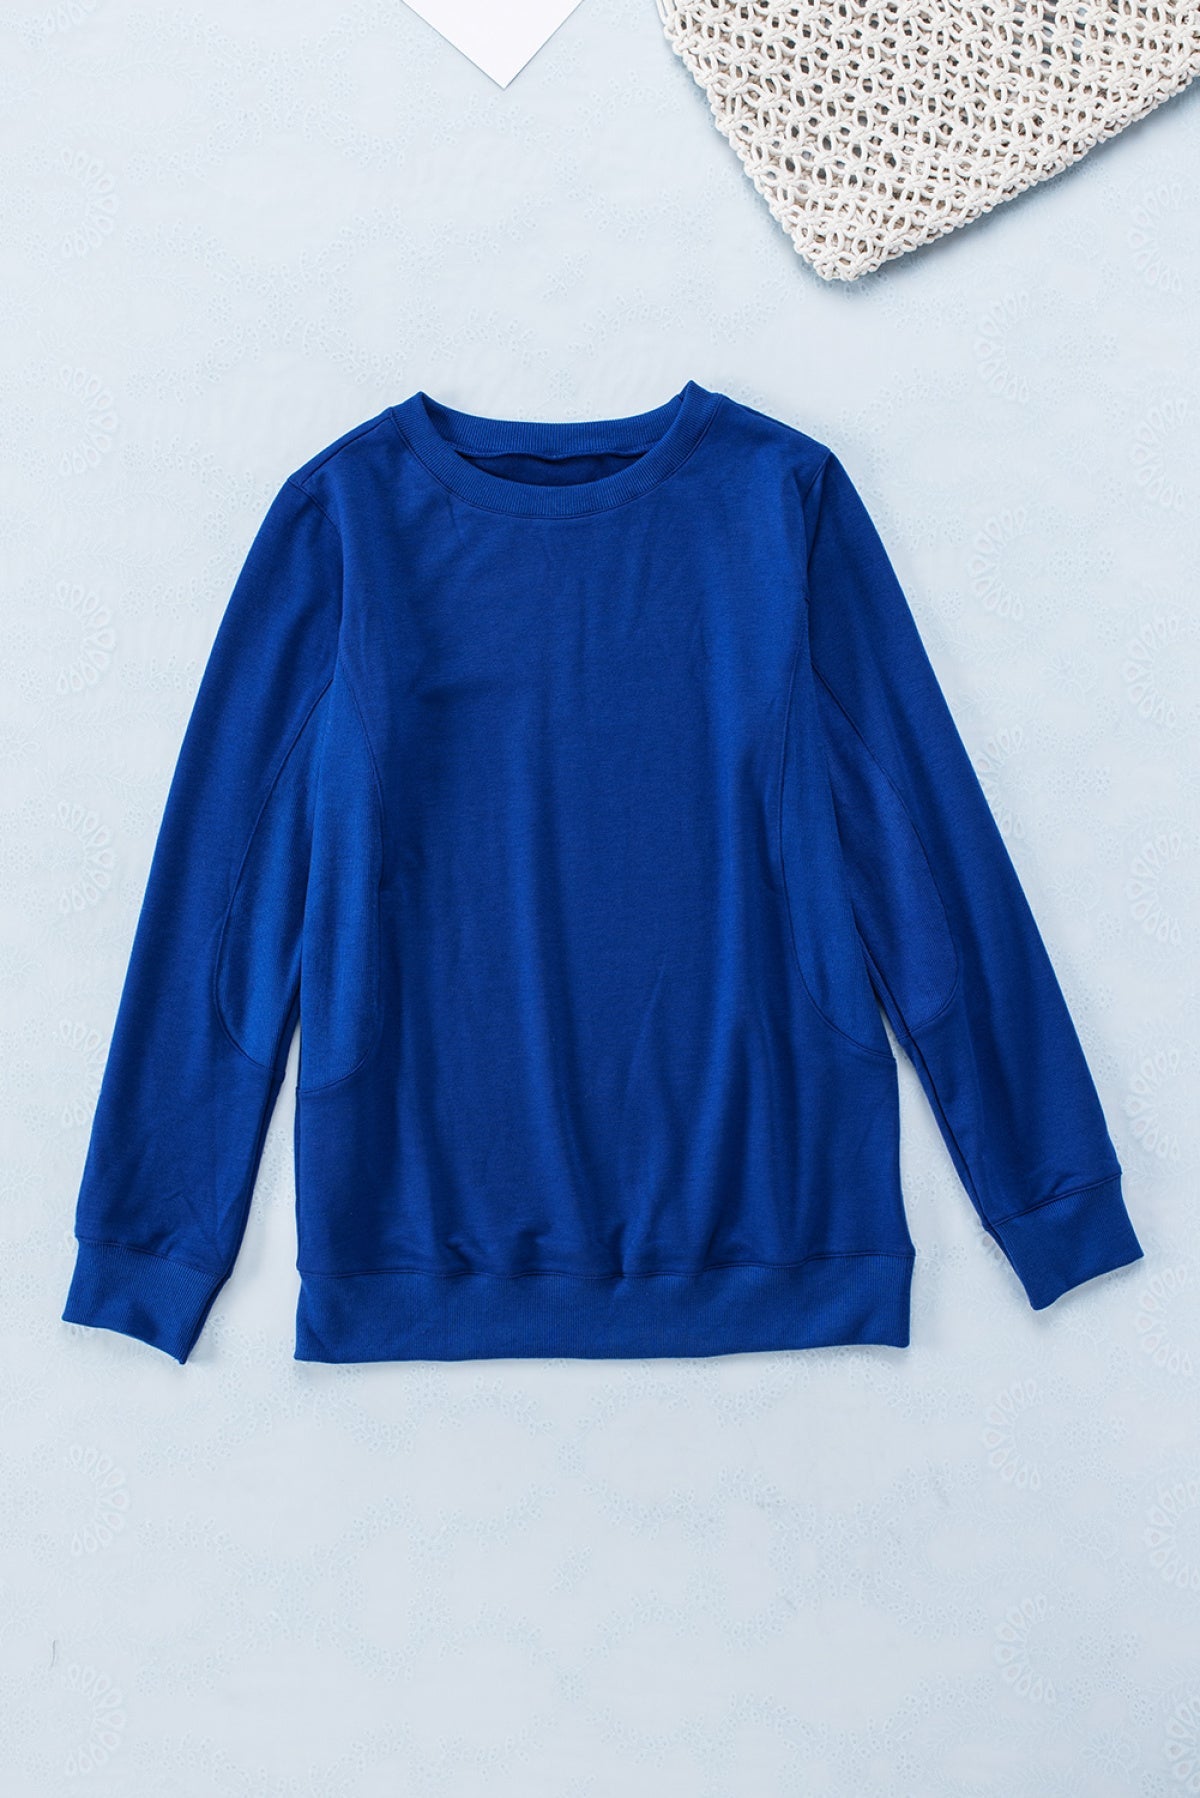 Wash Fleece Pullover Sweatshirt